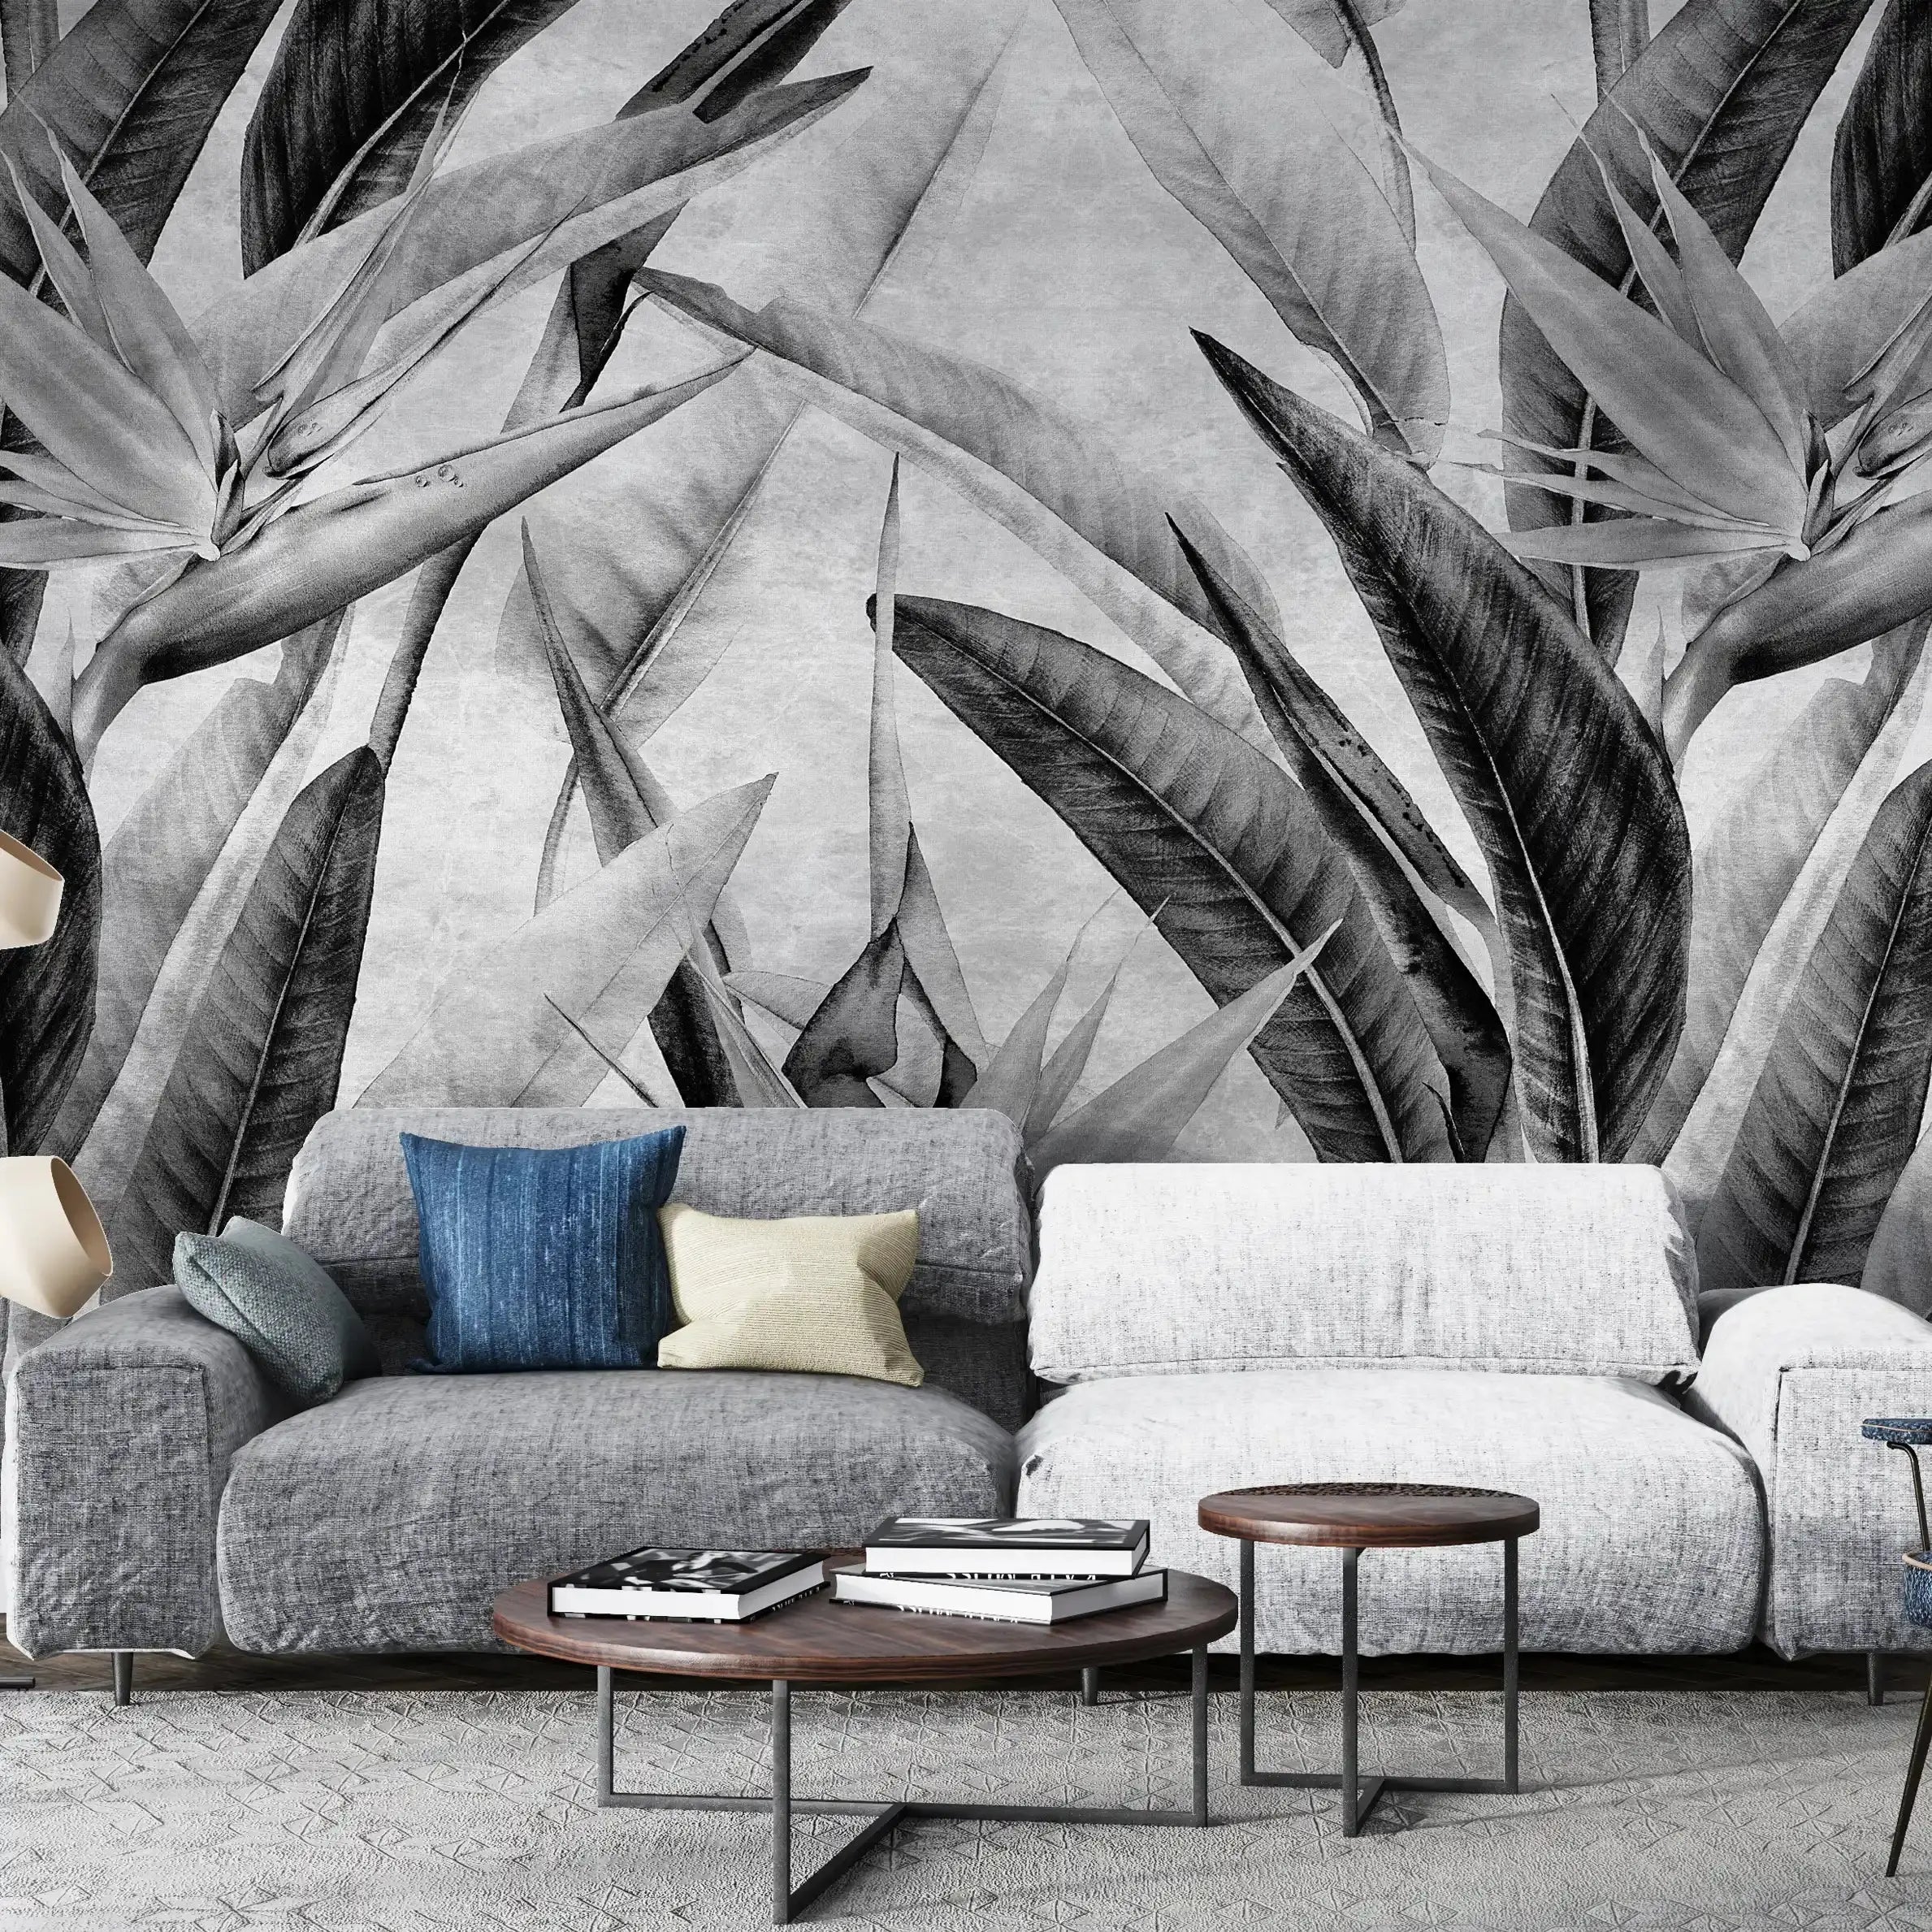 3039-E / Tropical Bird of Paradise Peel and Stick Wallpaper – Vibrant Botanical Design Wall Decor - Artevella